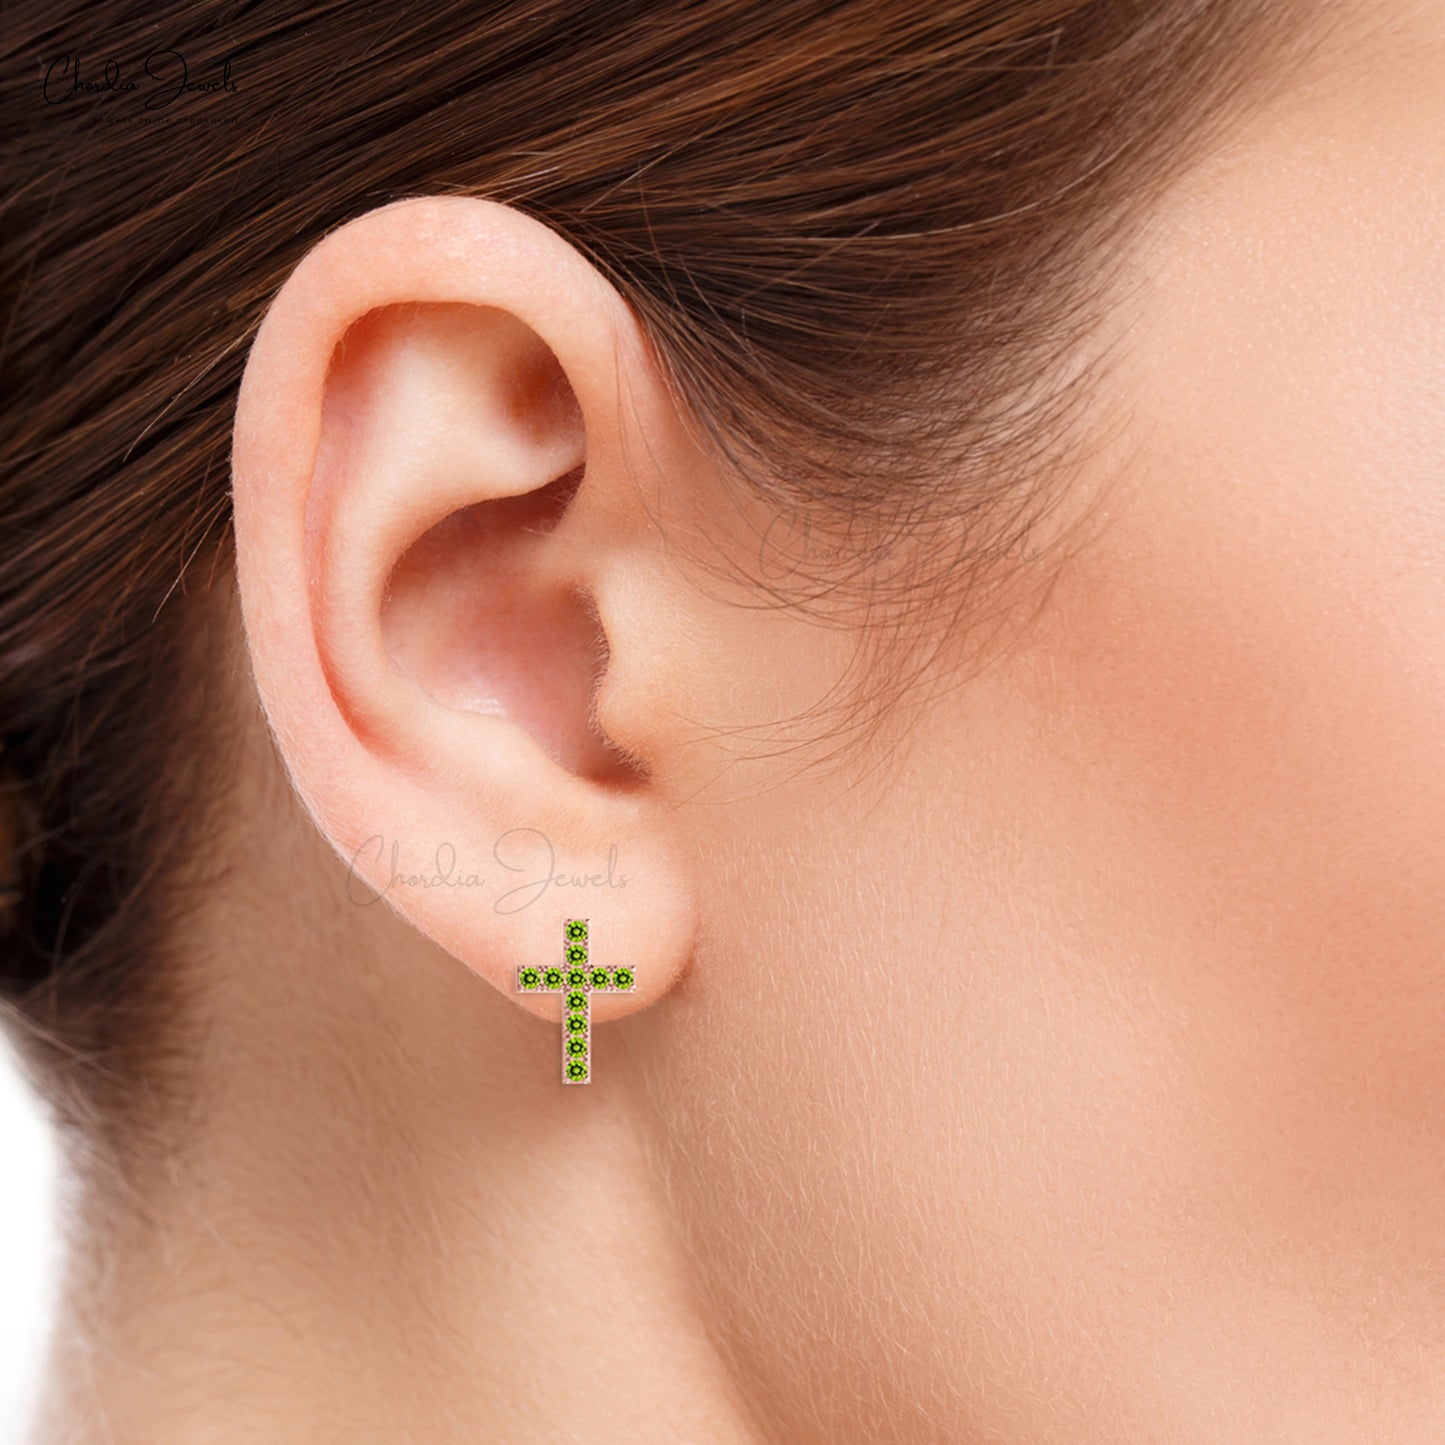 Buy 2mm Peridot Cross Earrings in 14k Real Gold At Chordia Jewels